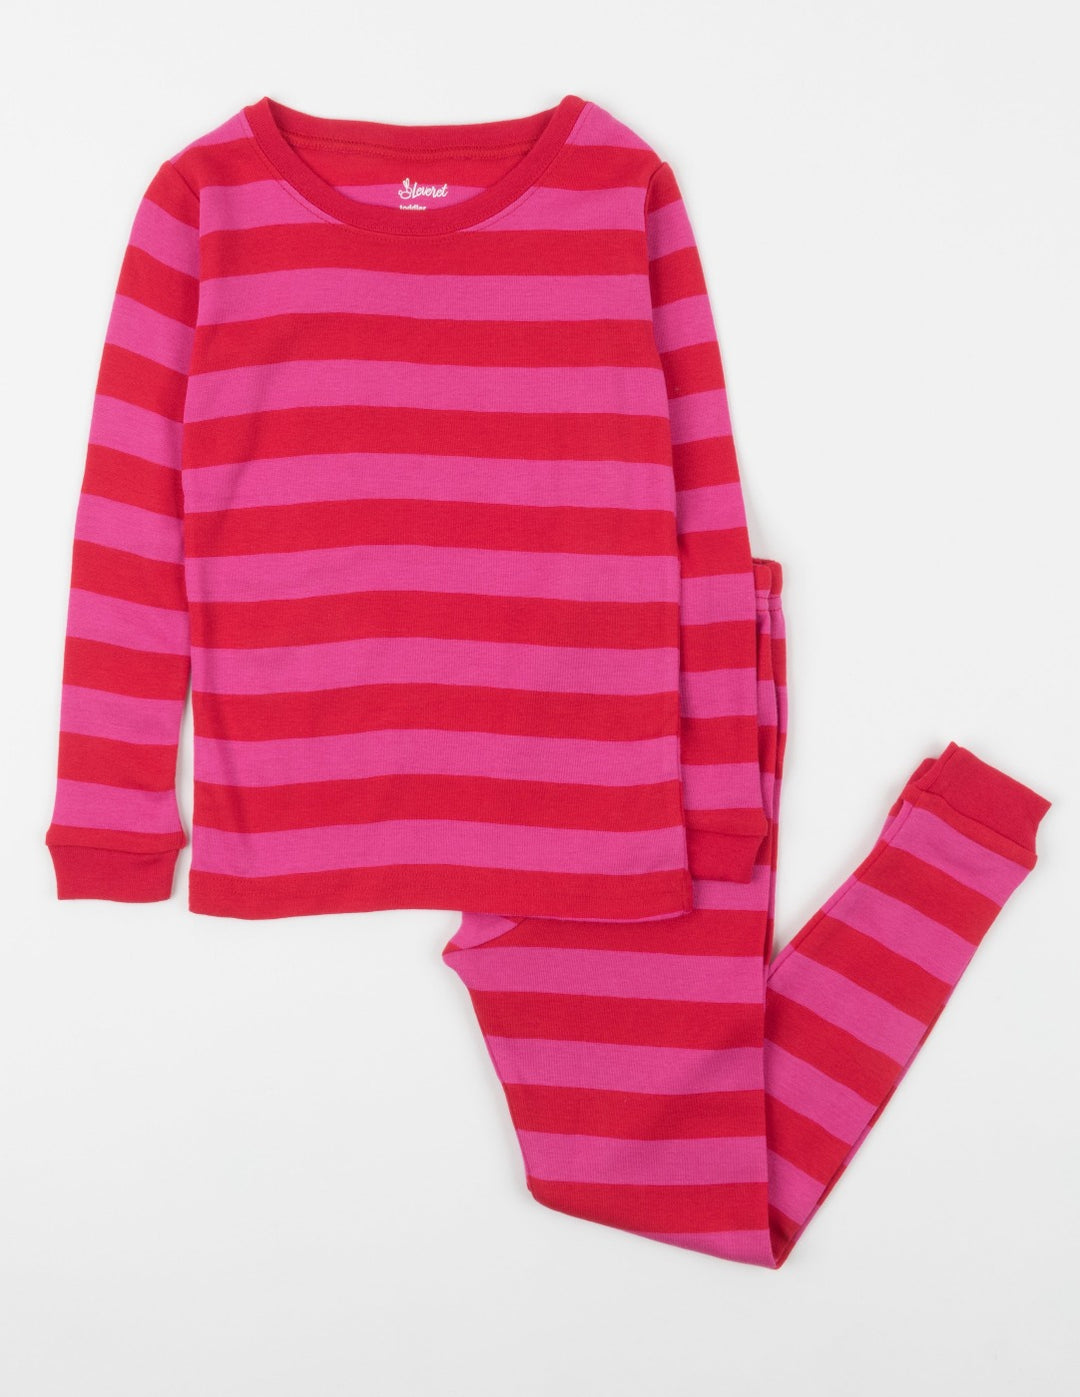 red and pink striped kids cotton pajamas